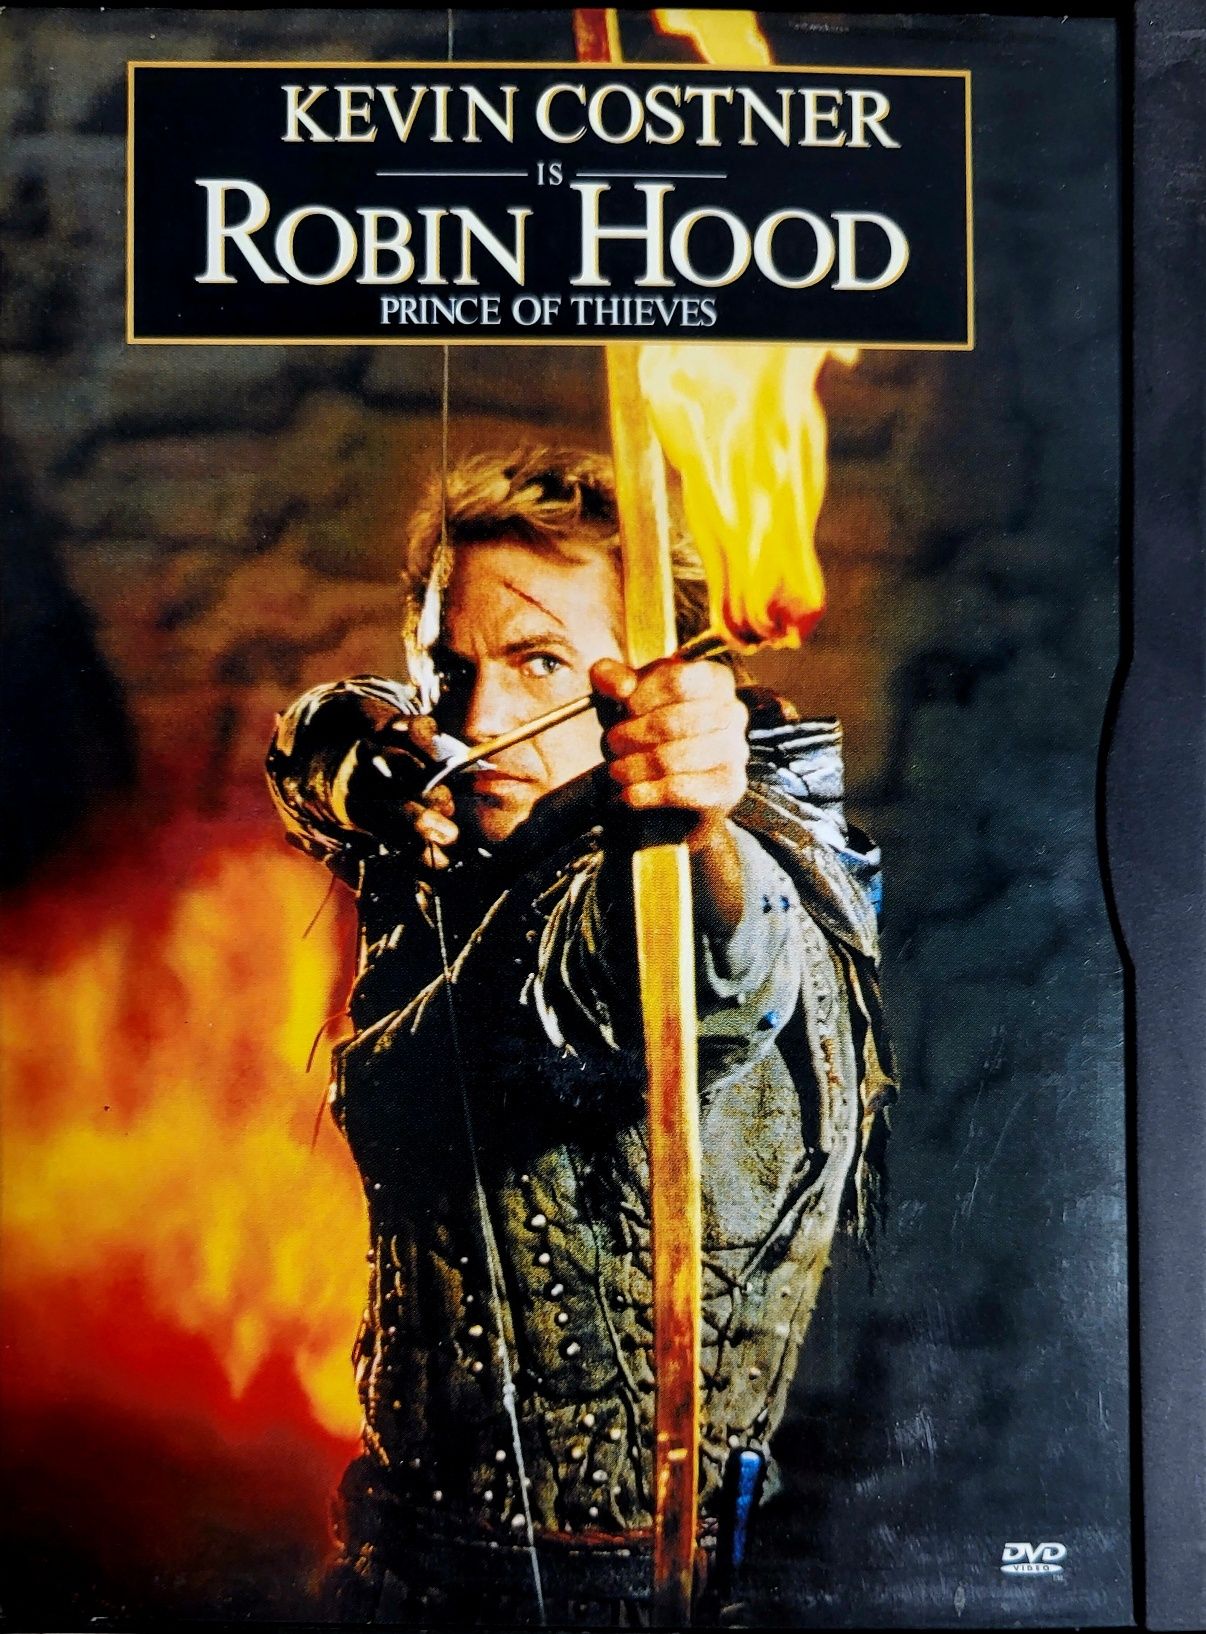 Film DVD Robin Hood Książę Złodziei stan Bdb-